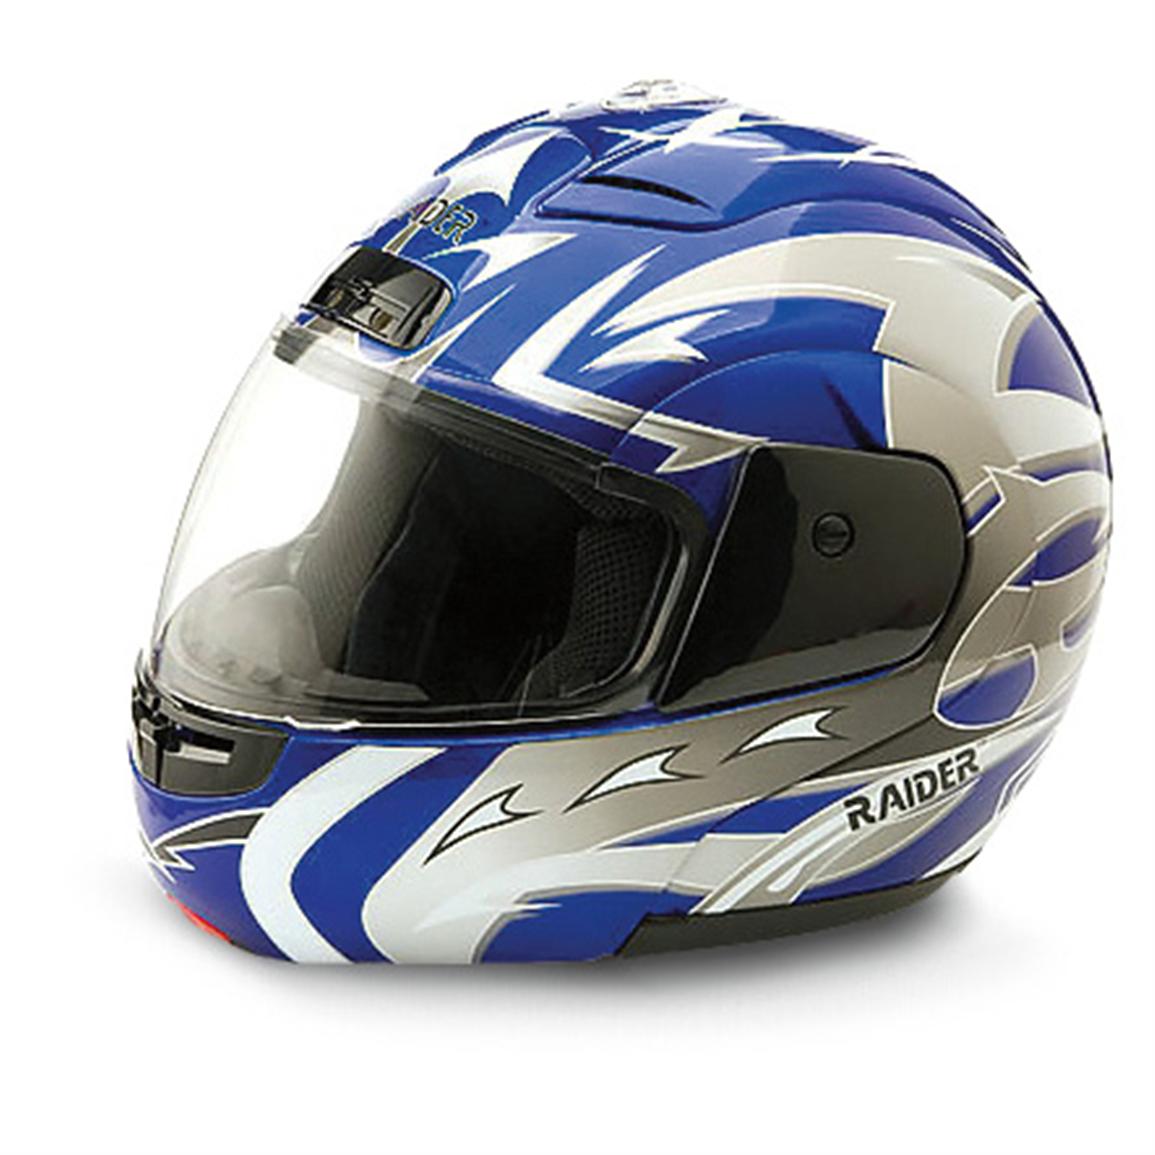 Raider™ Modular Motorcycle Helmet - 140014, Helmets & Goggles at Sportsman's Guide